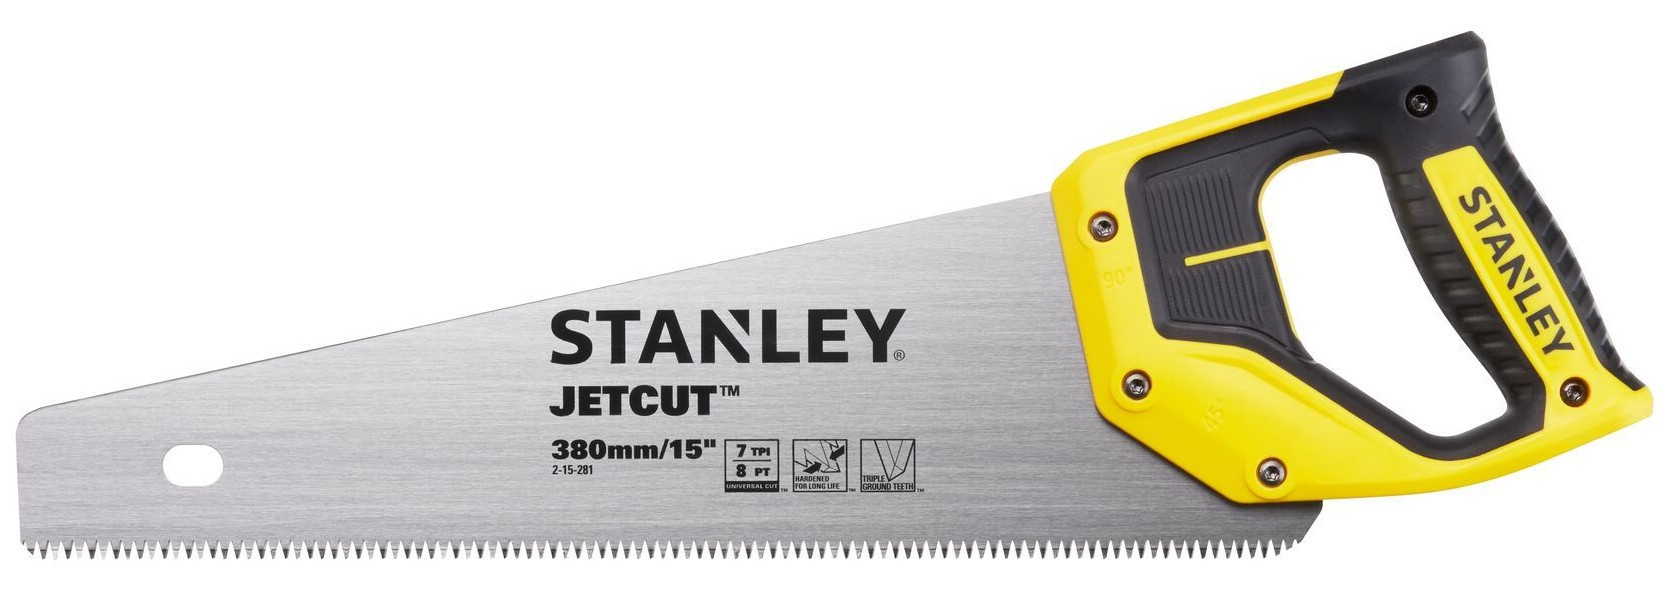 Ножовка по дереву 380 мм STANLEY Jet-Cut SP 2-15-281